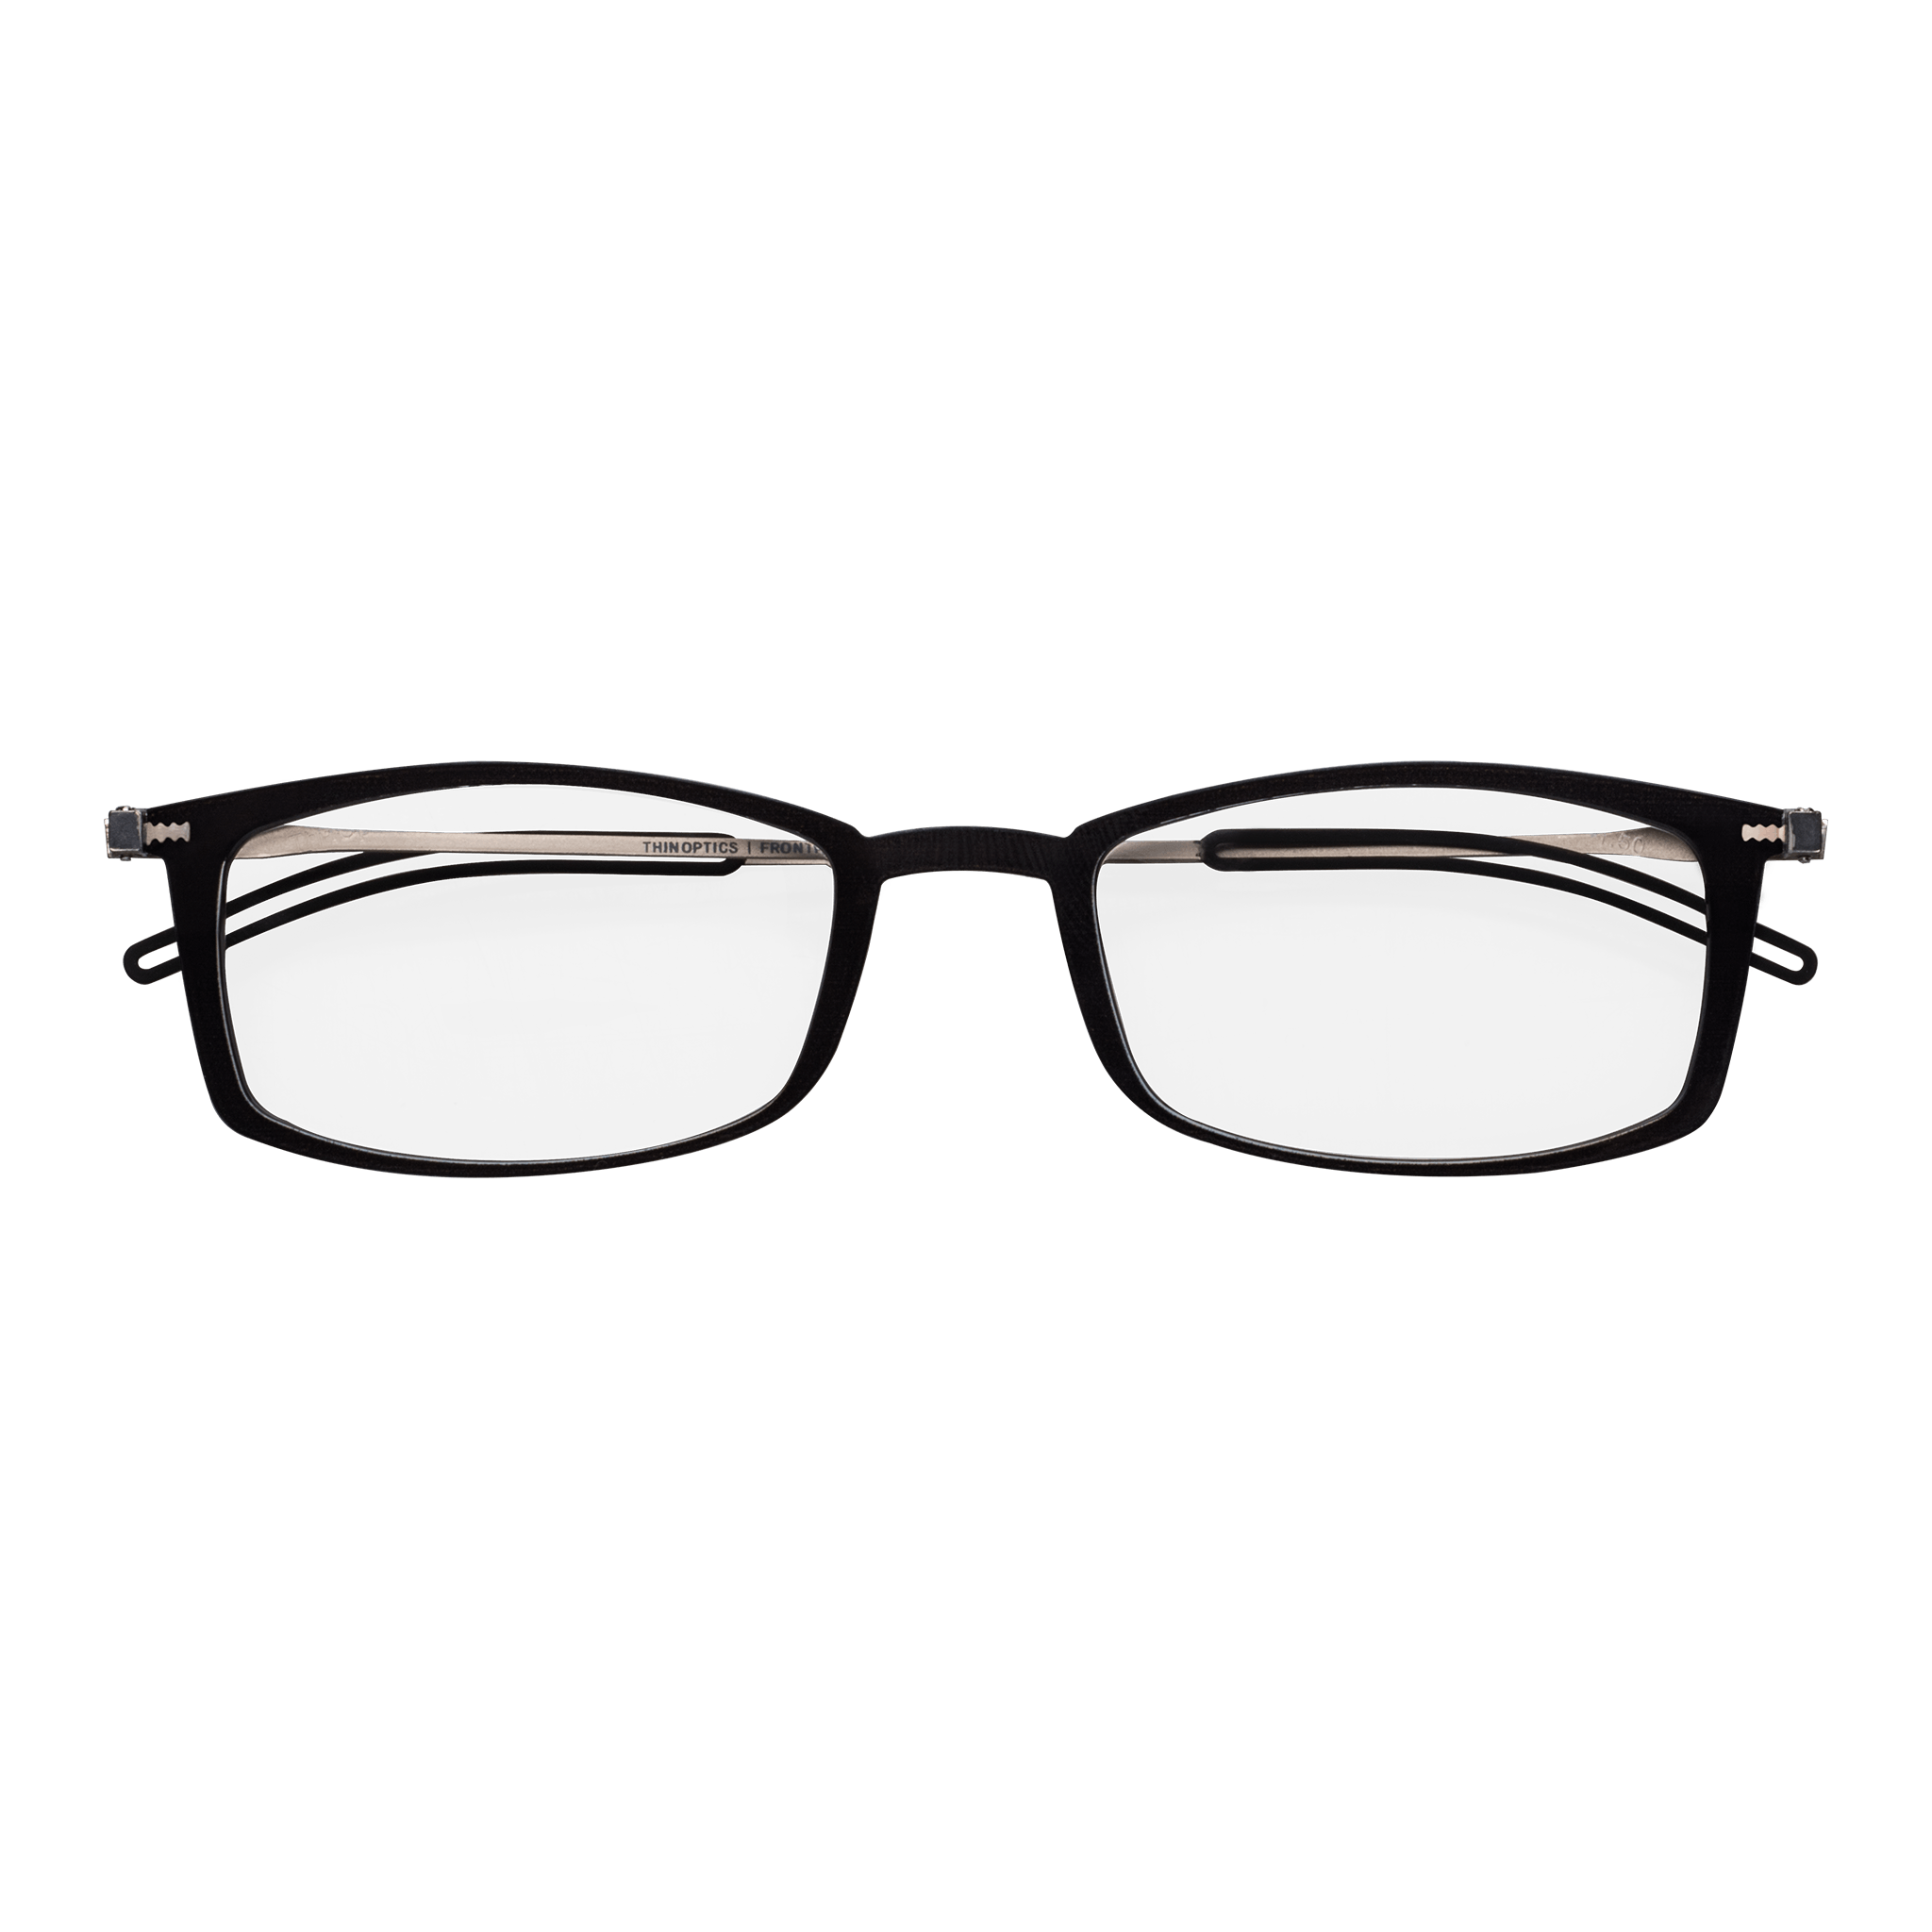 Thinoptics Palo Alto Sunglasses With Aluminum Case - Gun Metal/gray Flash  Mirror : Target